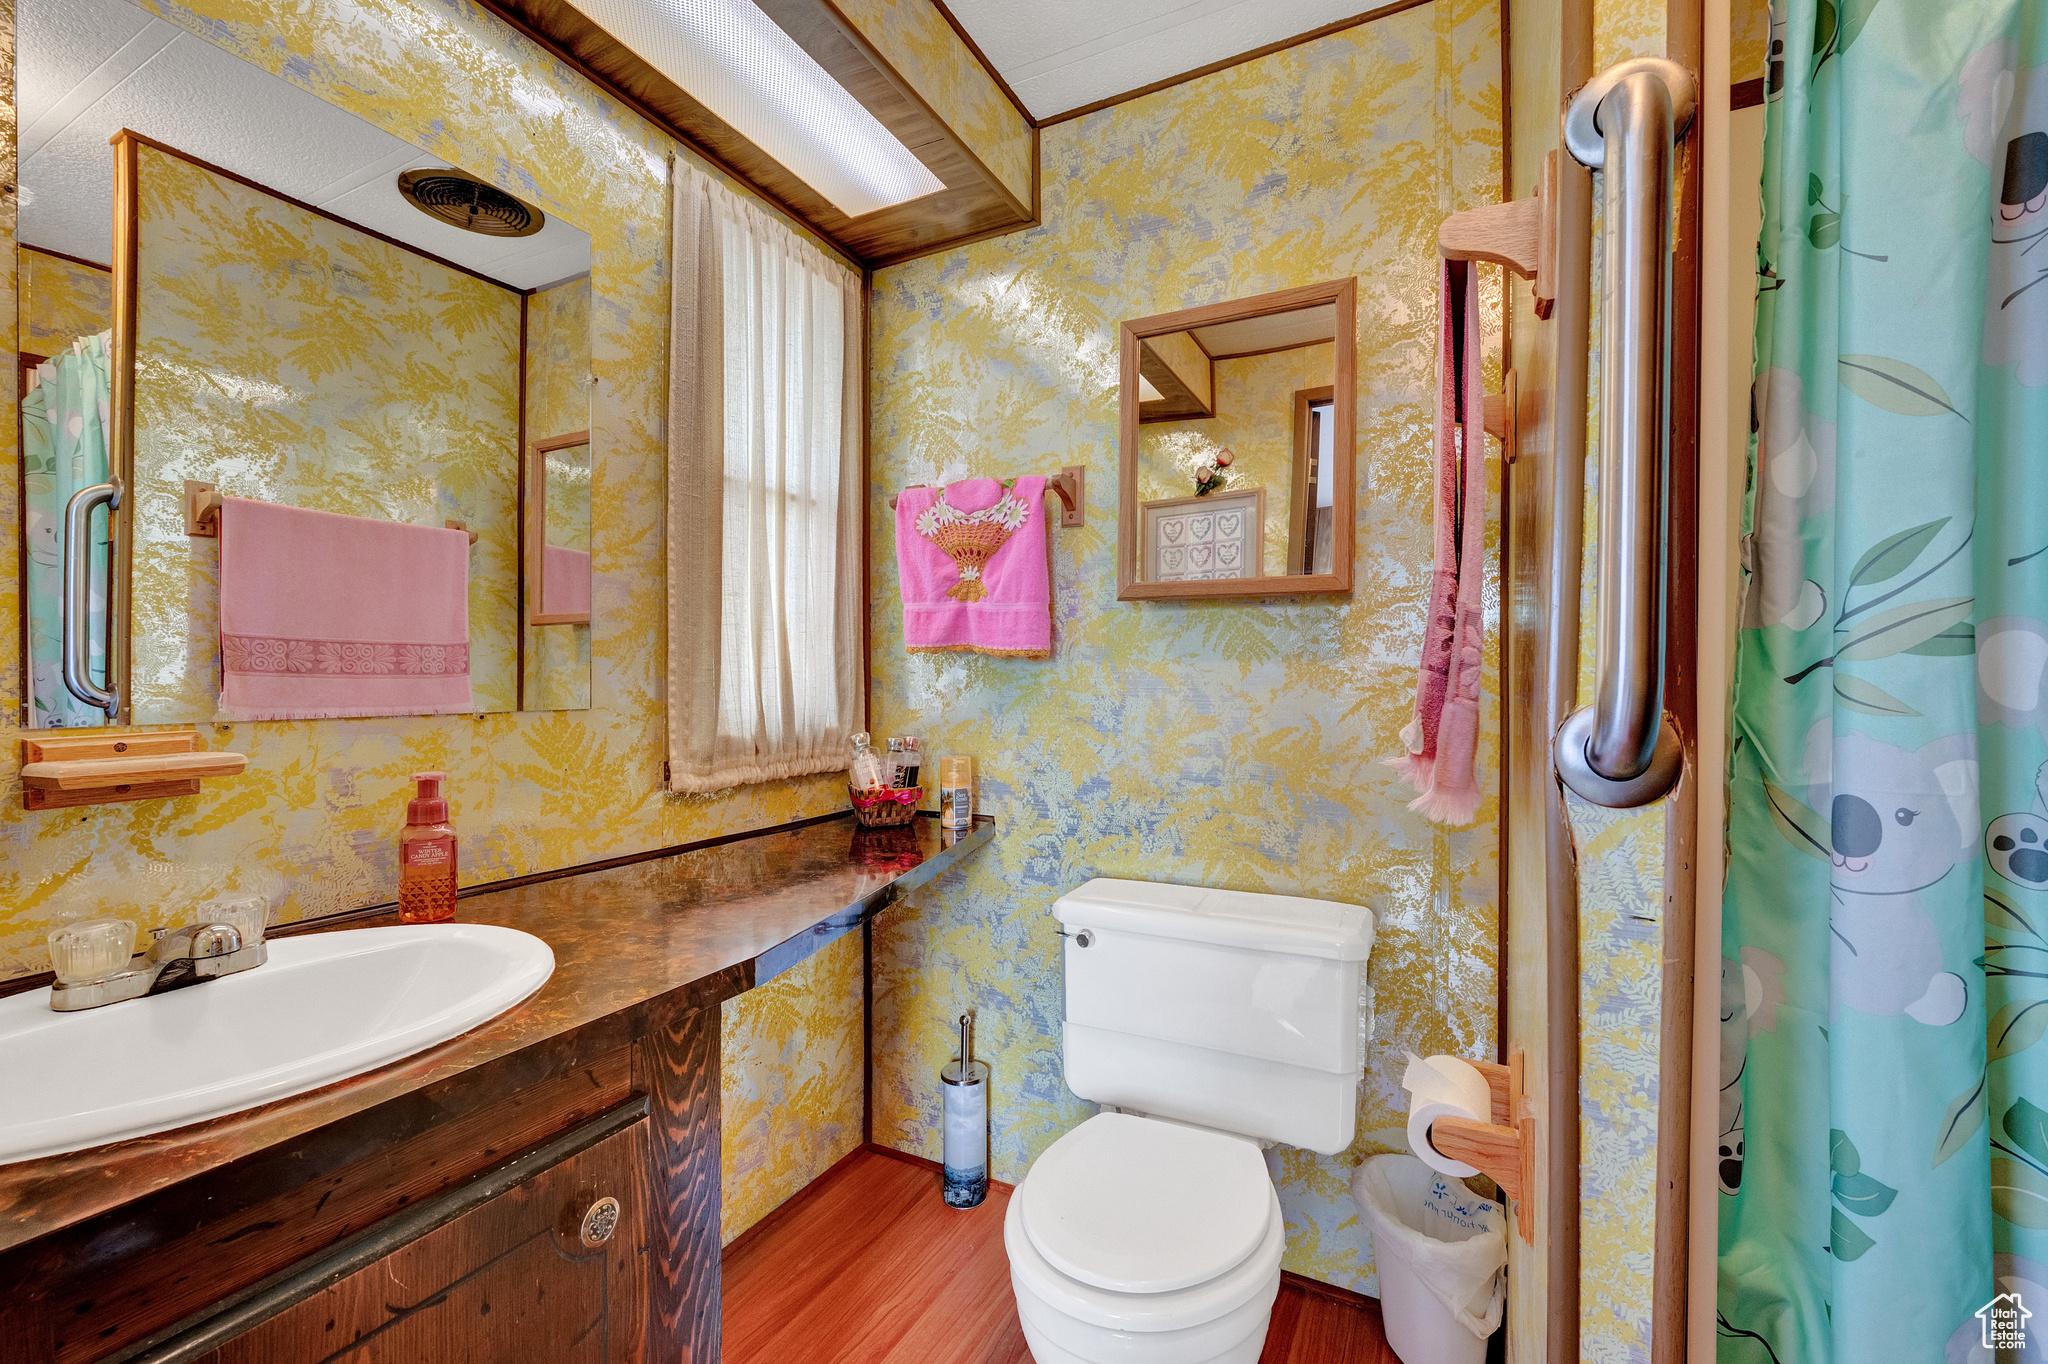 Bathroom featuring a textured ceiling, toilet, hardwood / wood-style floors, and large vanity